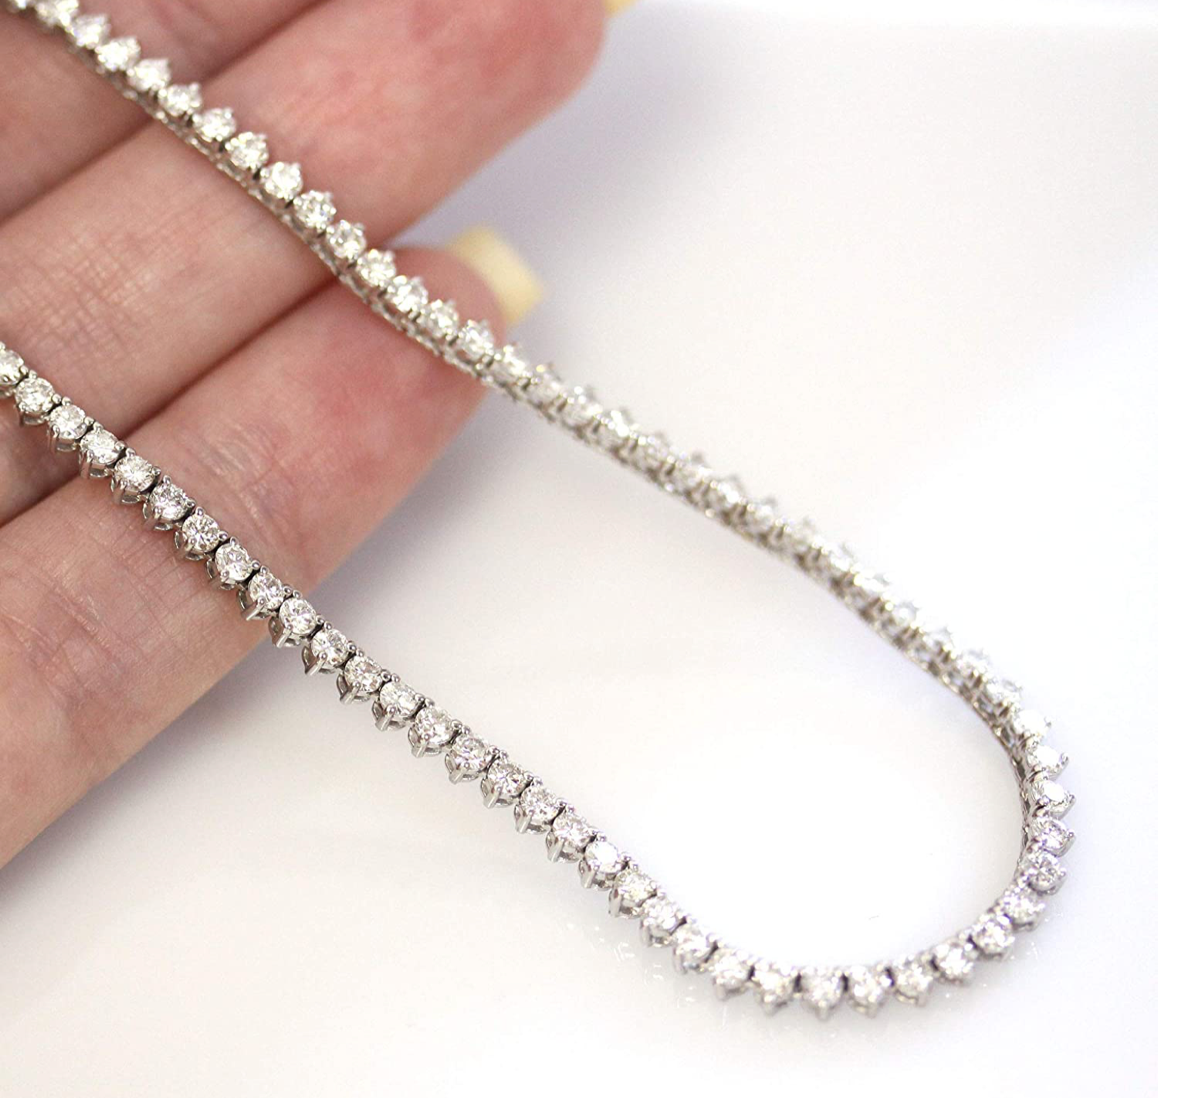 Simplicity is the ultimate sophistication. This minimalist diamond pendant  display elegance and beauty #diamondnco #diamond #necklace | Instagram